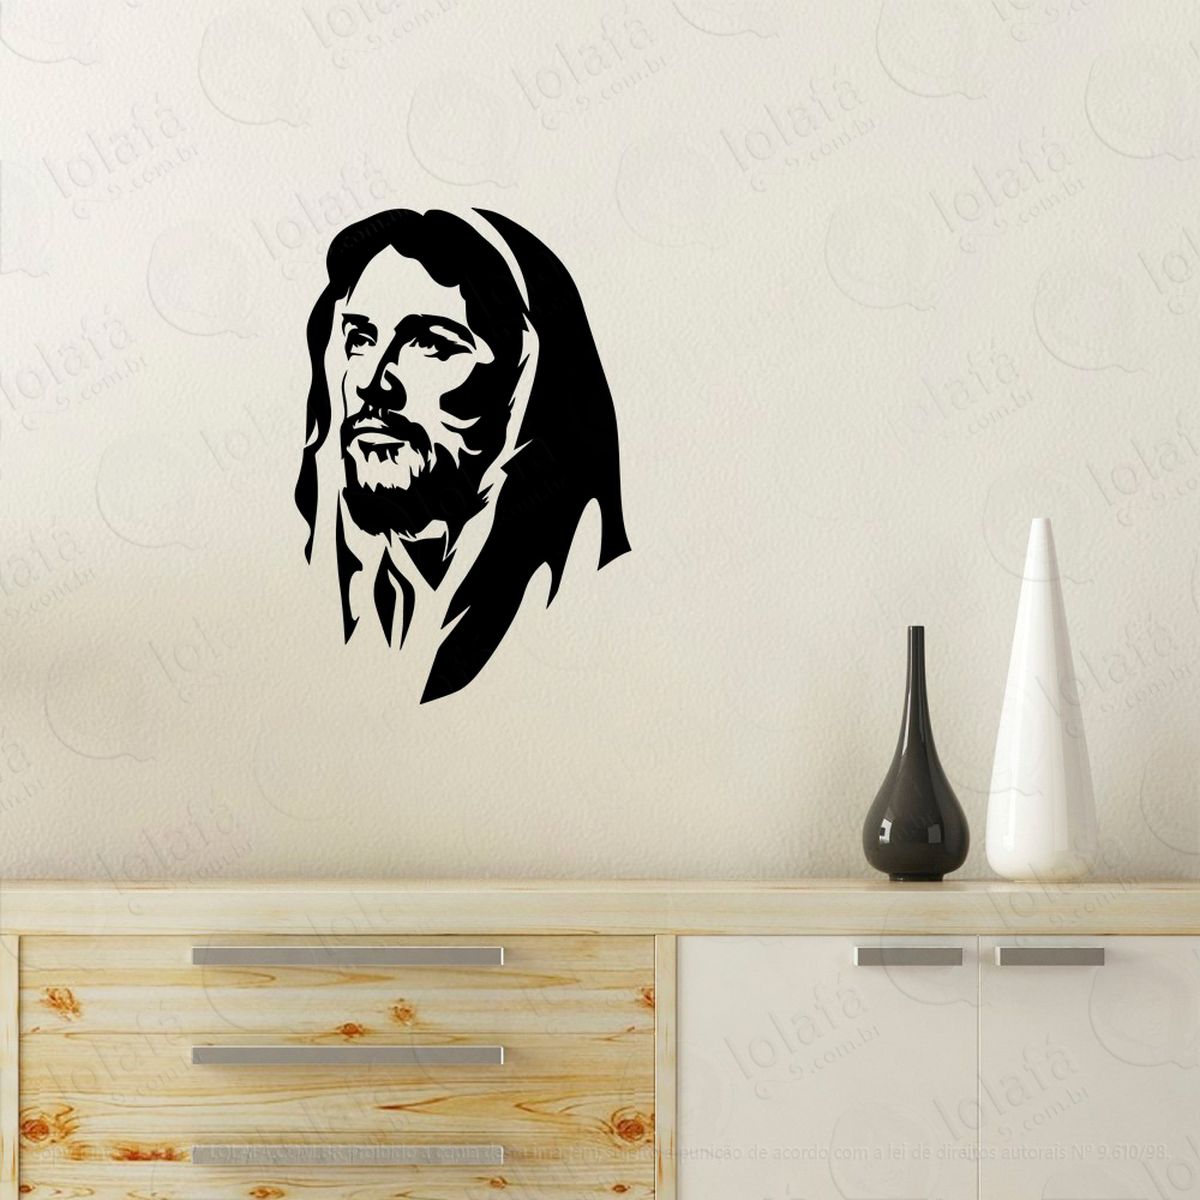 jesus cristo adesivo de parede decorativo para casa, quarto, sala e vidro - mod:9